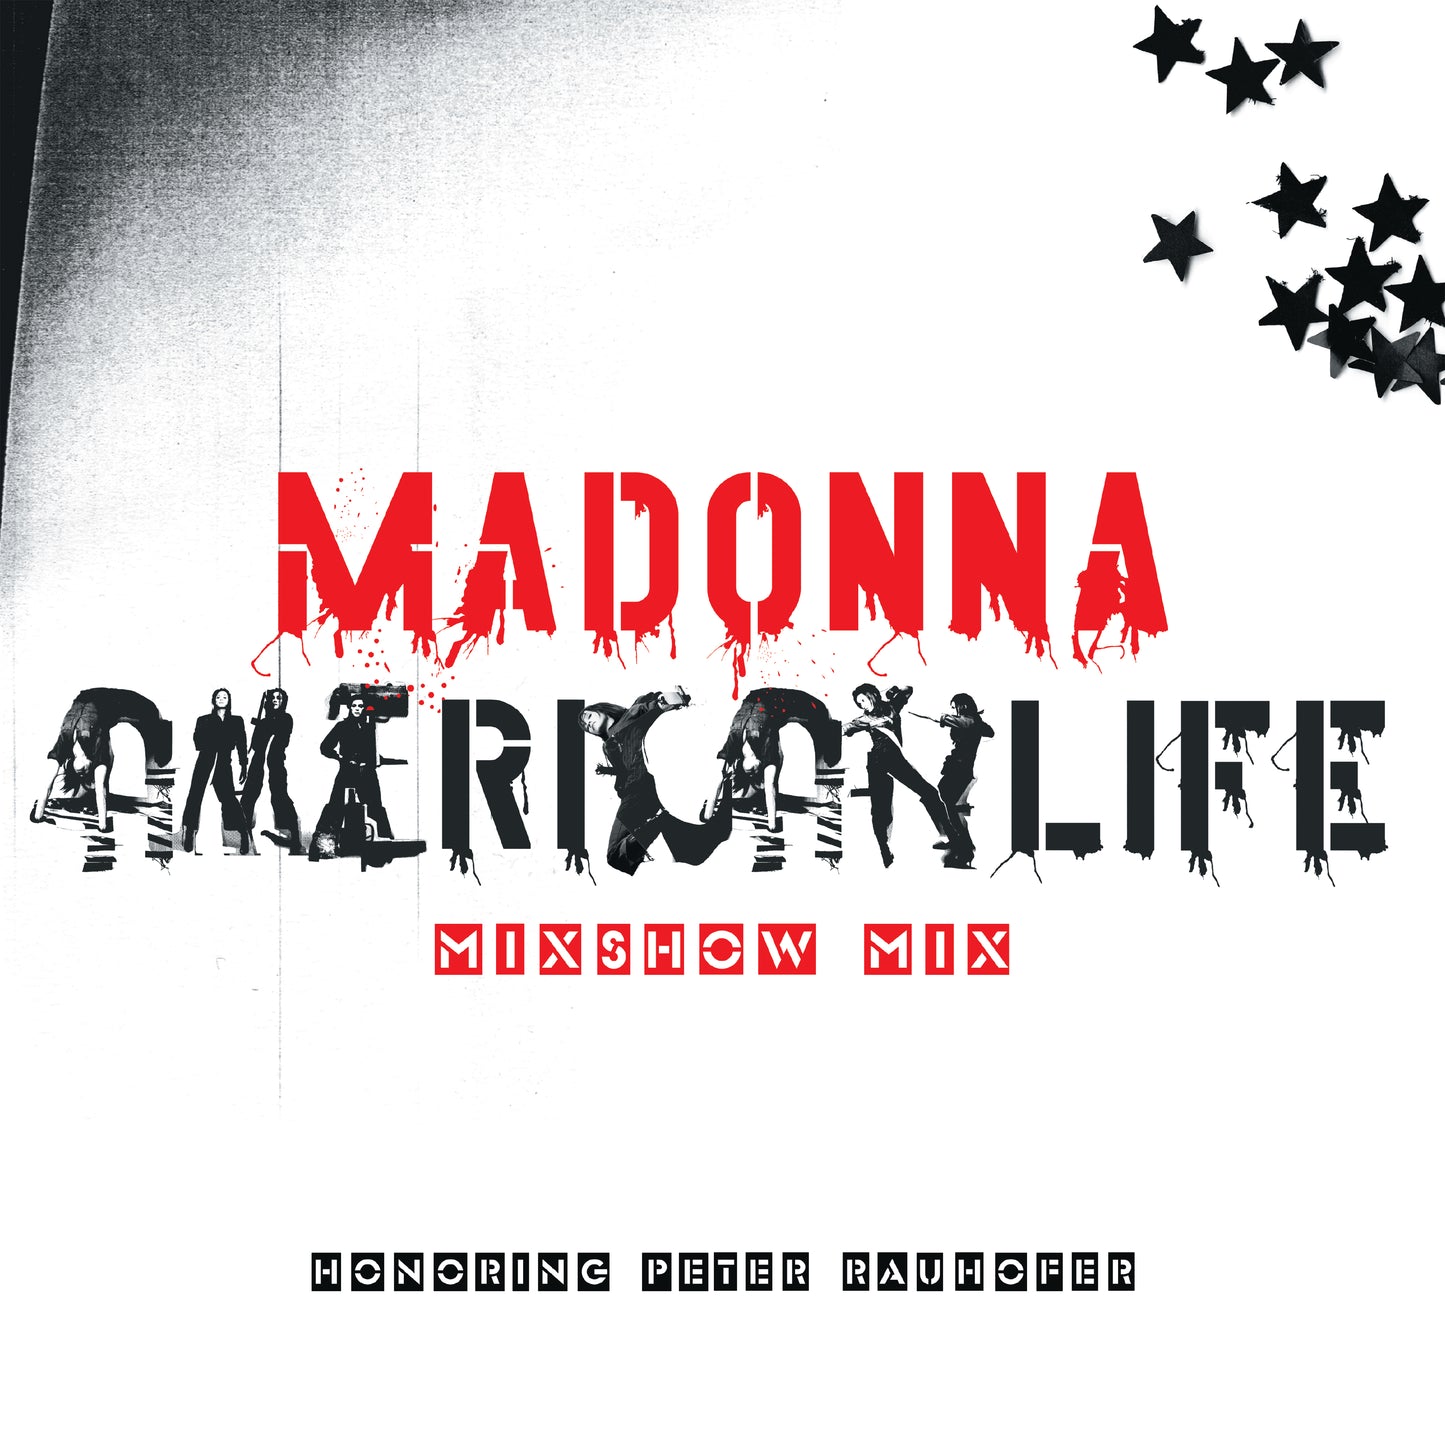 Madonna - American Life Mix Show Mix